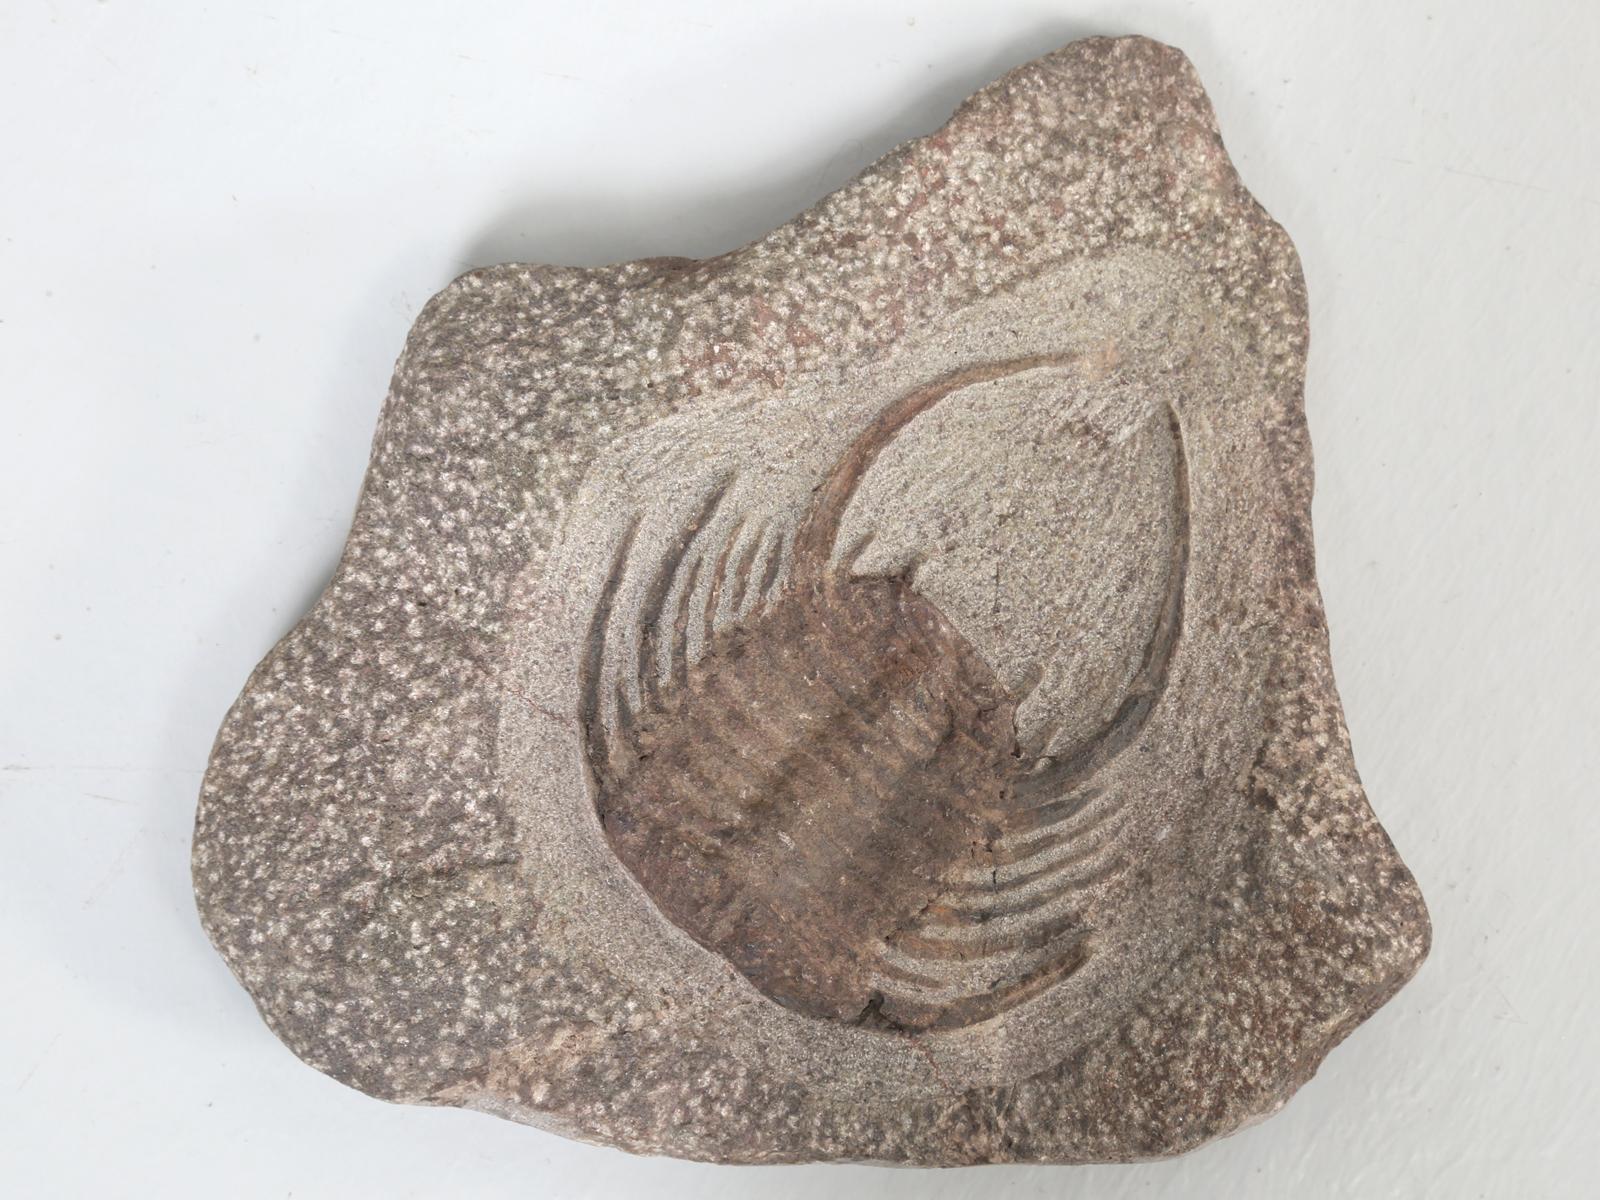 Selenopeltis are an extinct genus of odontopleurid trilobites from the family Odontopleuridae. 
Fossil Selenopeltis can reach a length of 4